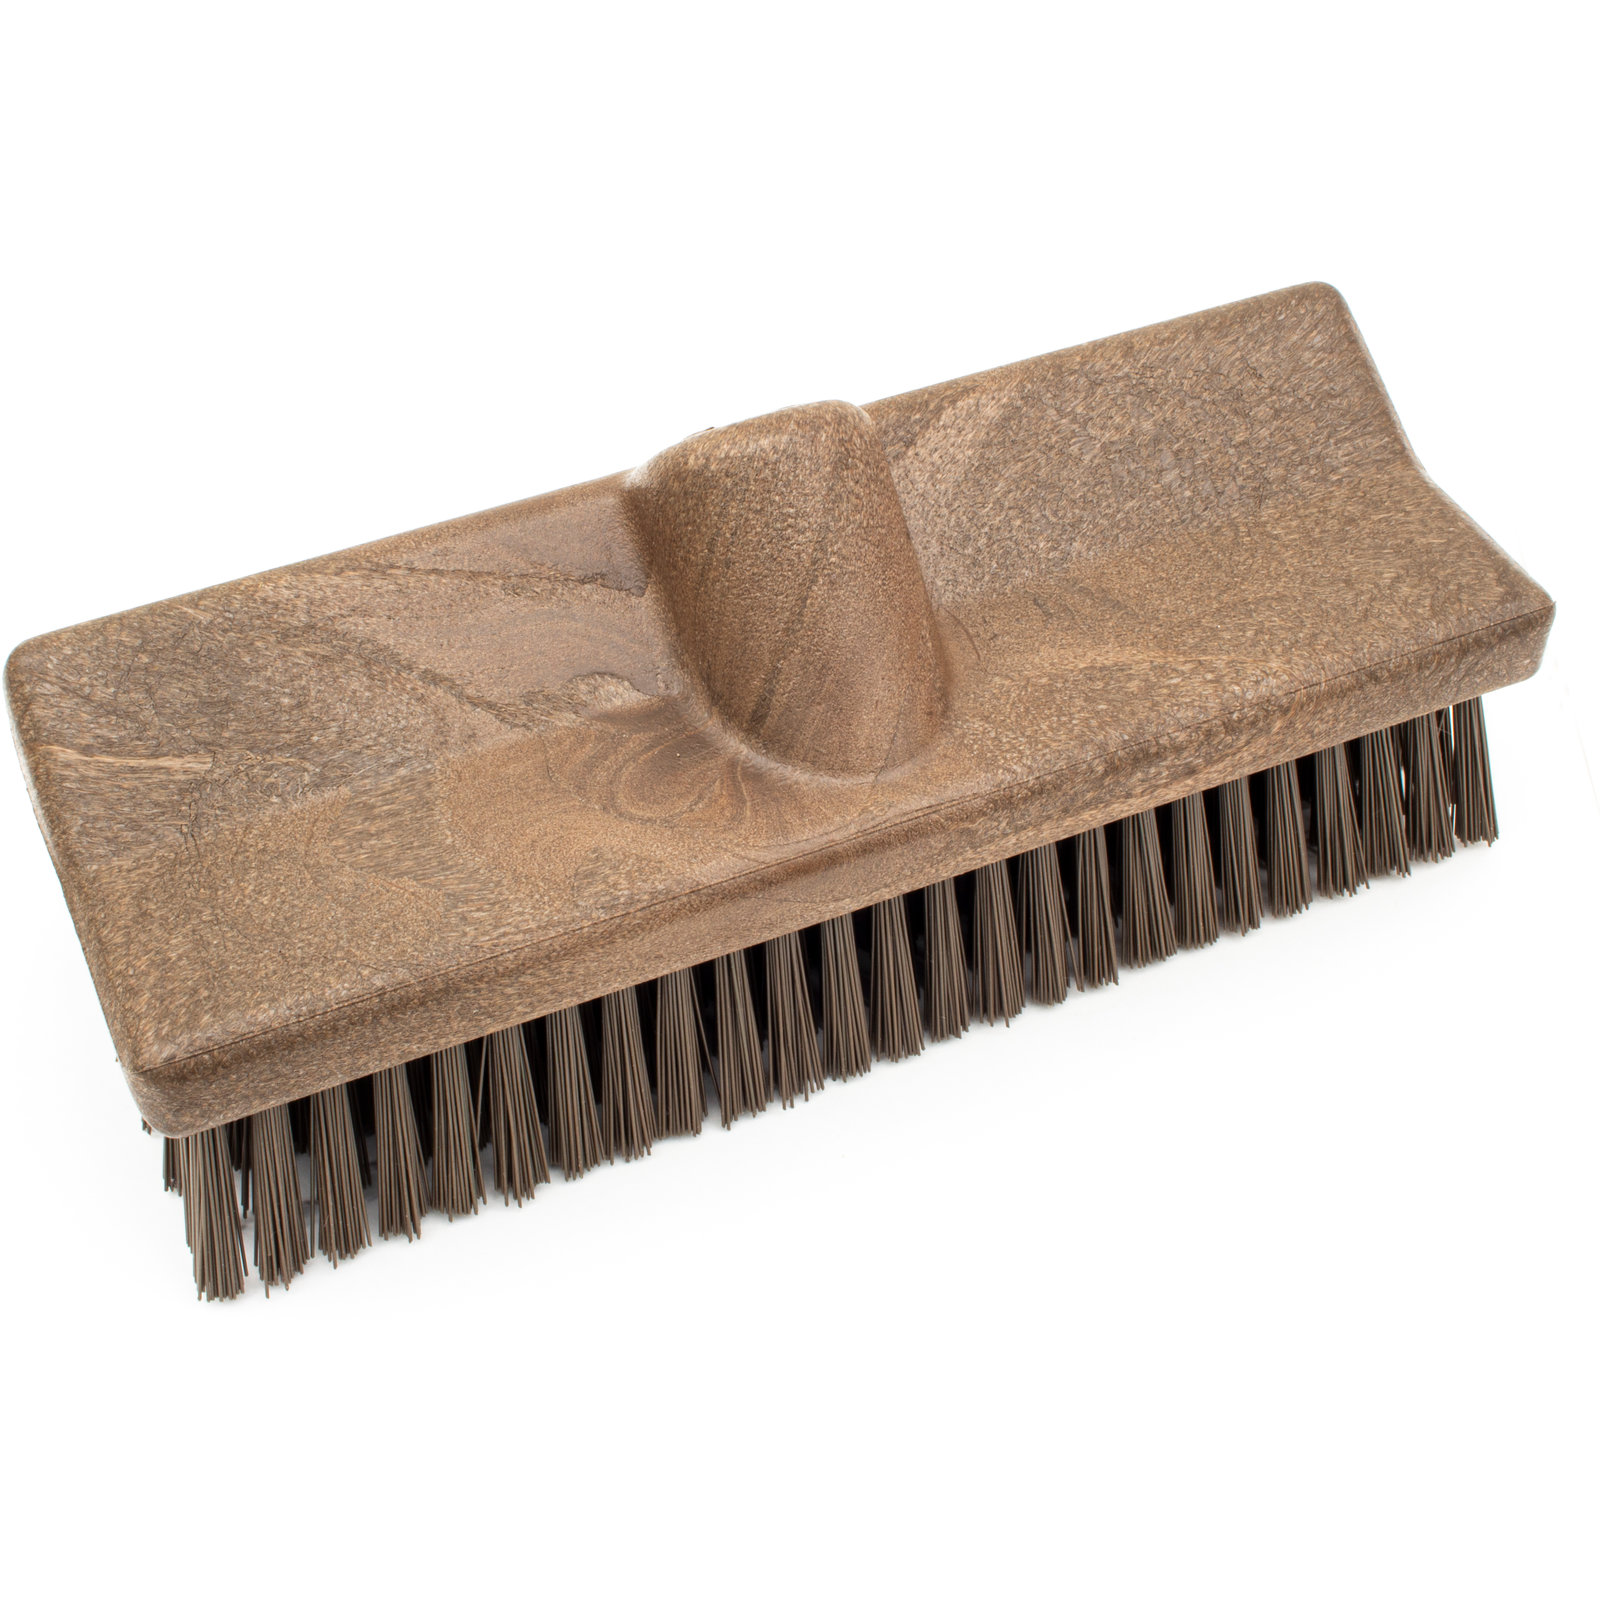 Carpet & Upholstery Brushes  Carlisle FoodService Products